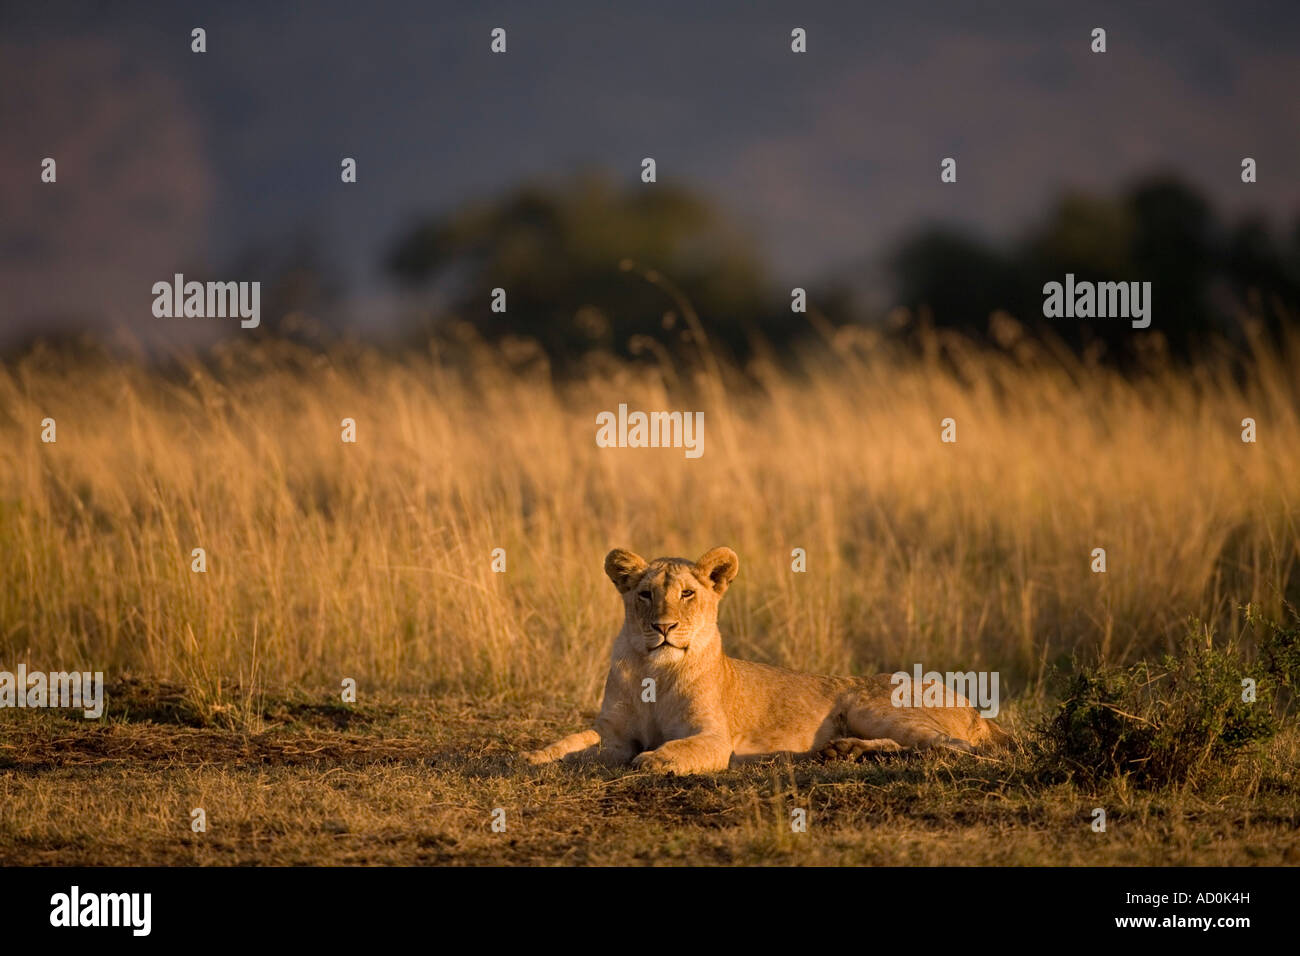 Africa Kenya Masai Mara Game Reserve Lioness Panthera leo resting on savanna in first light of dawn Stock Photo